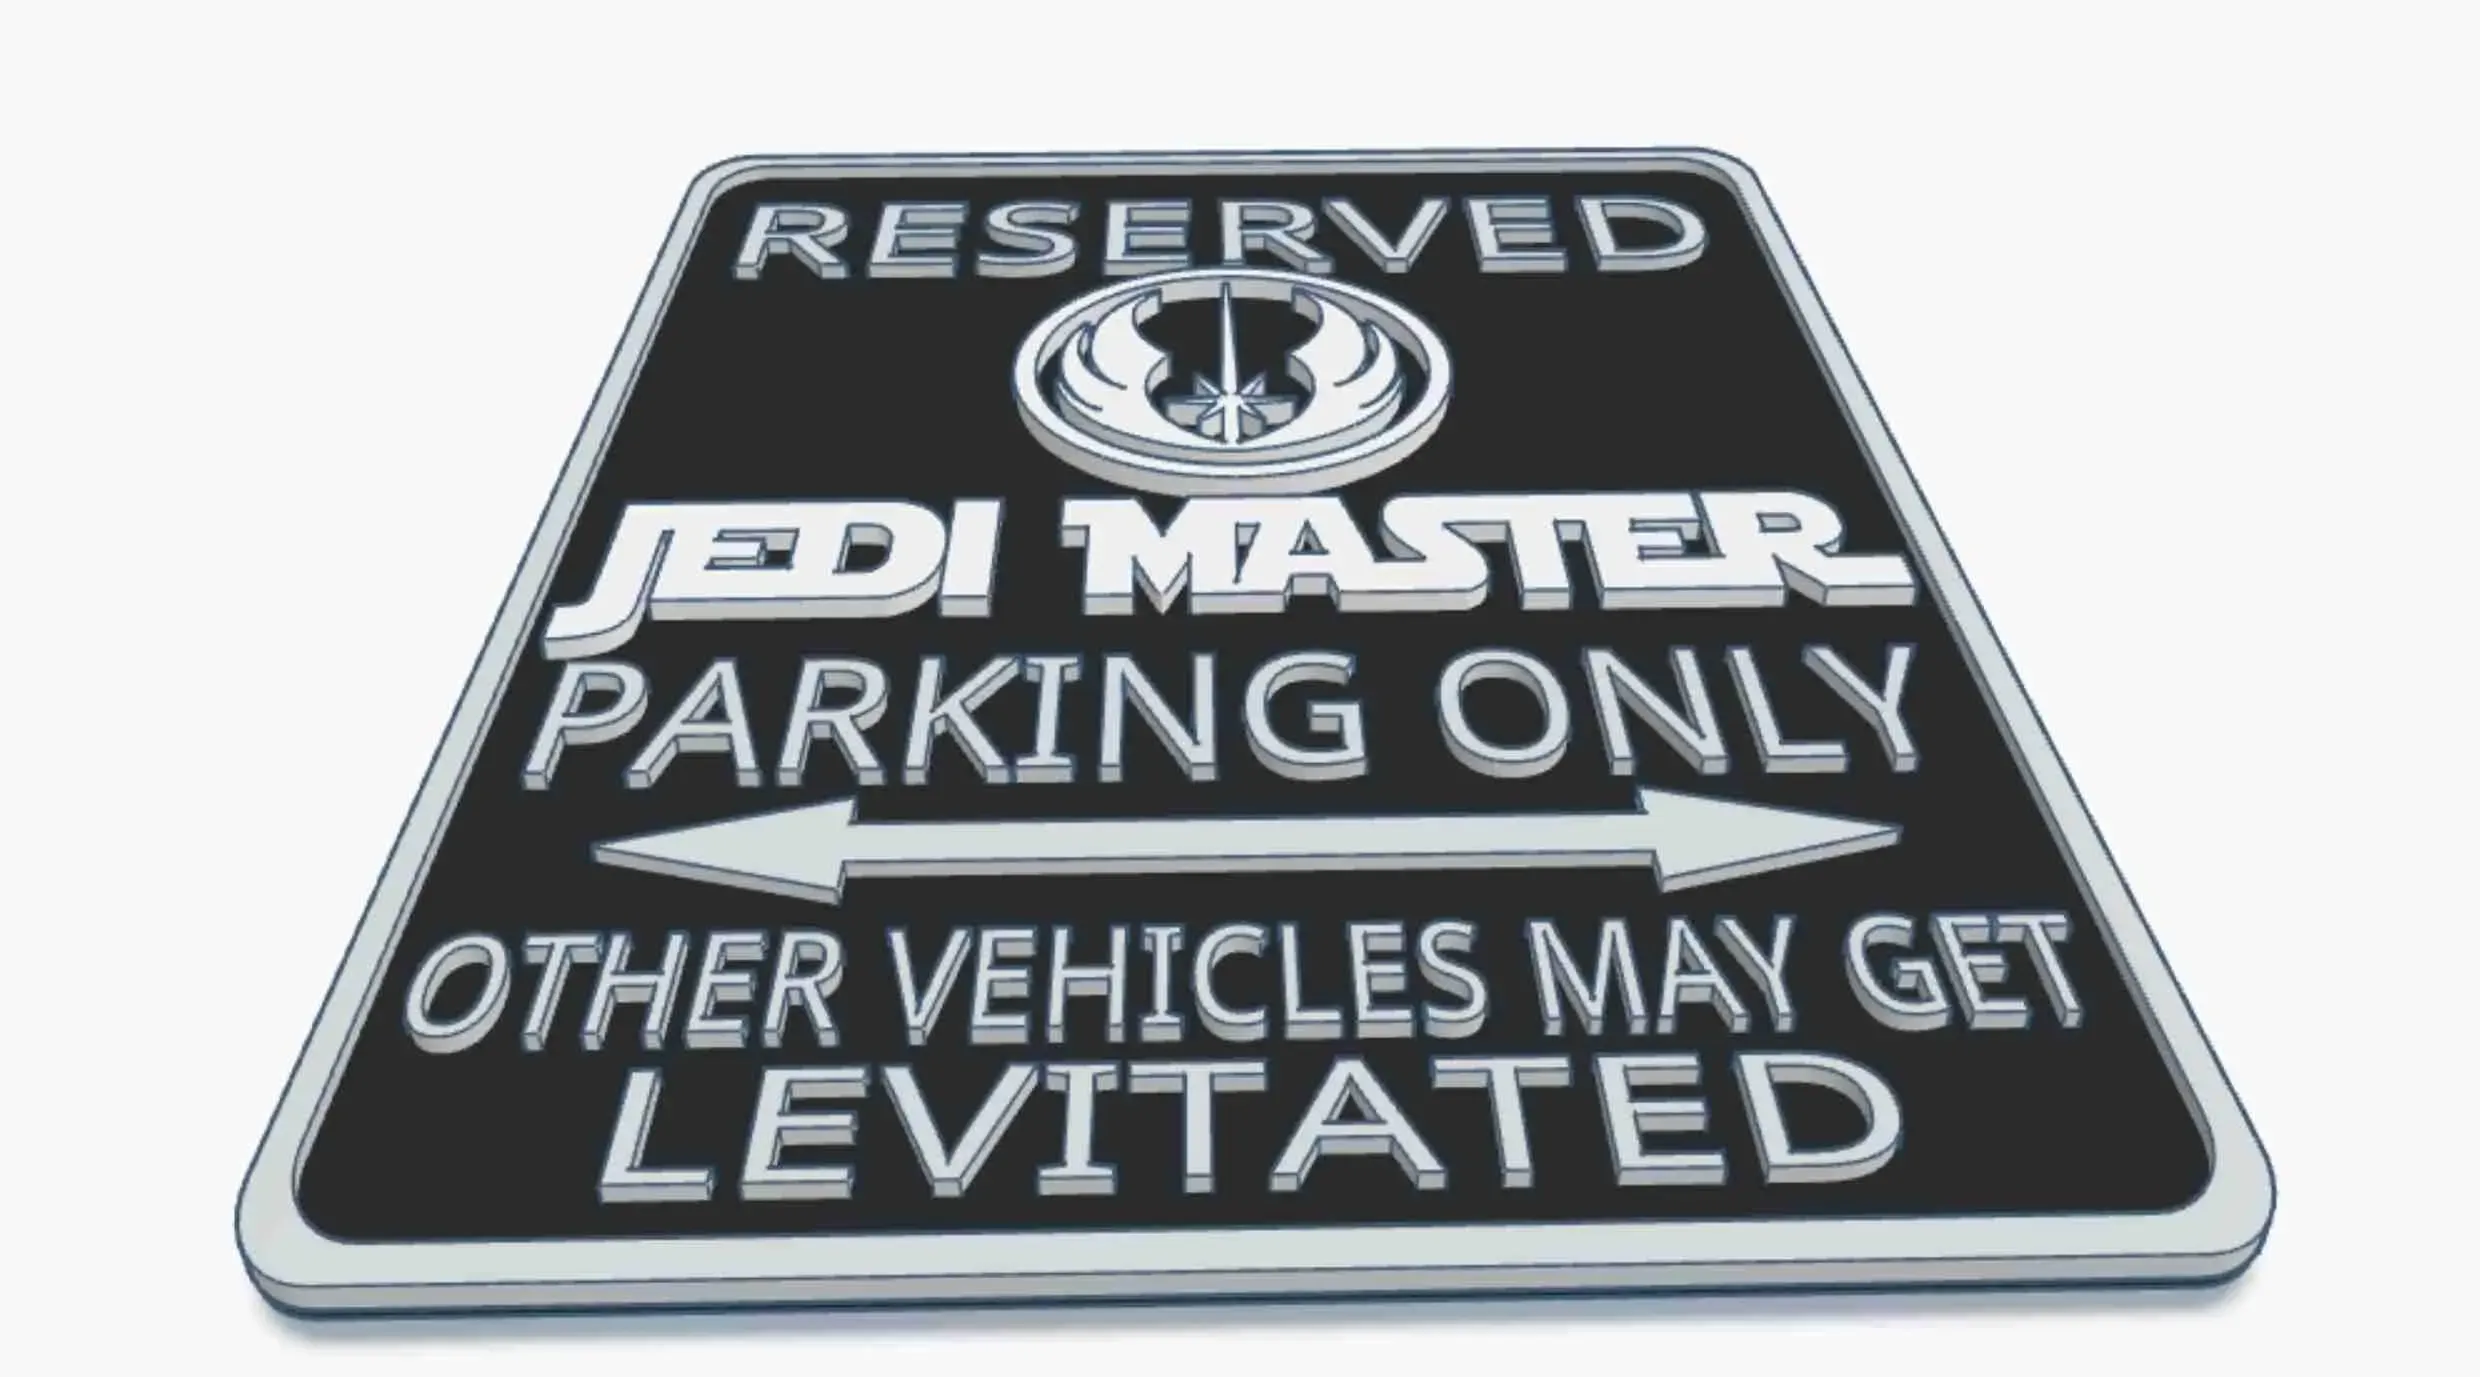 Jedi Knight Master Star Wars Fun Parking Warning Sign